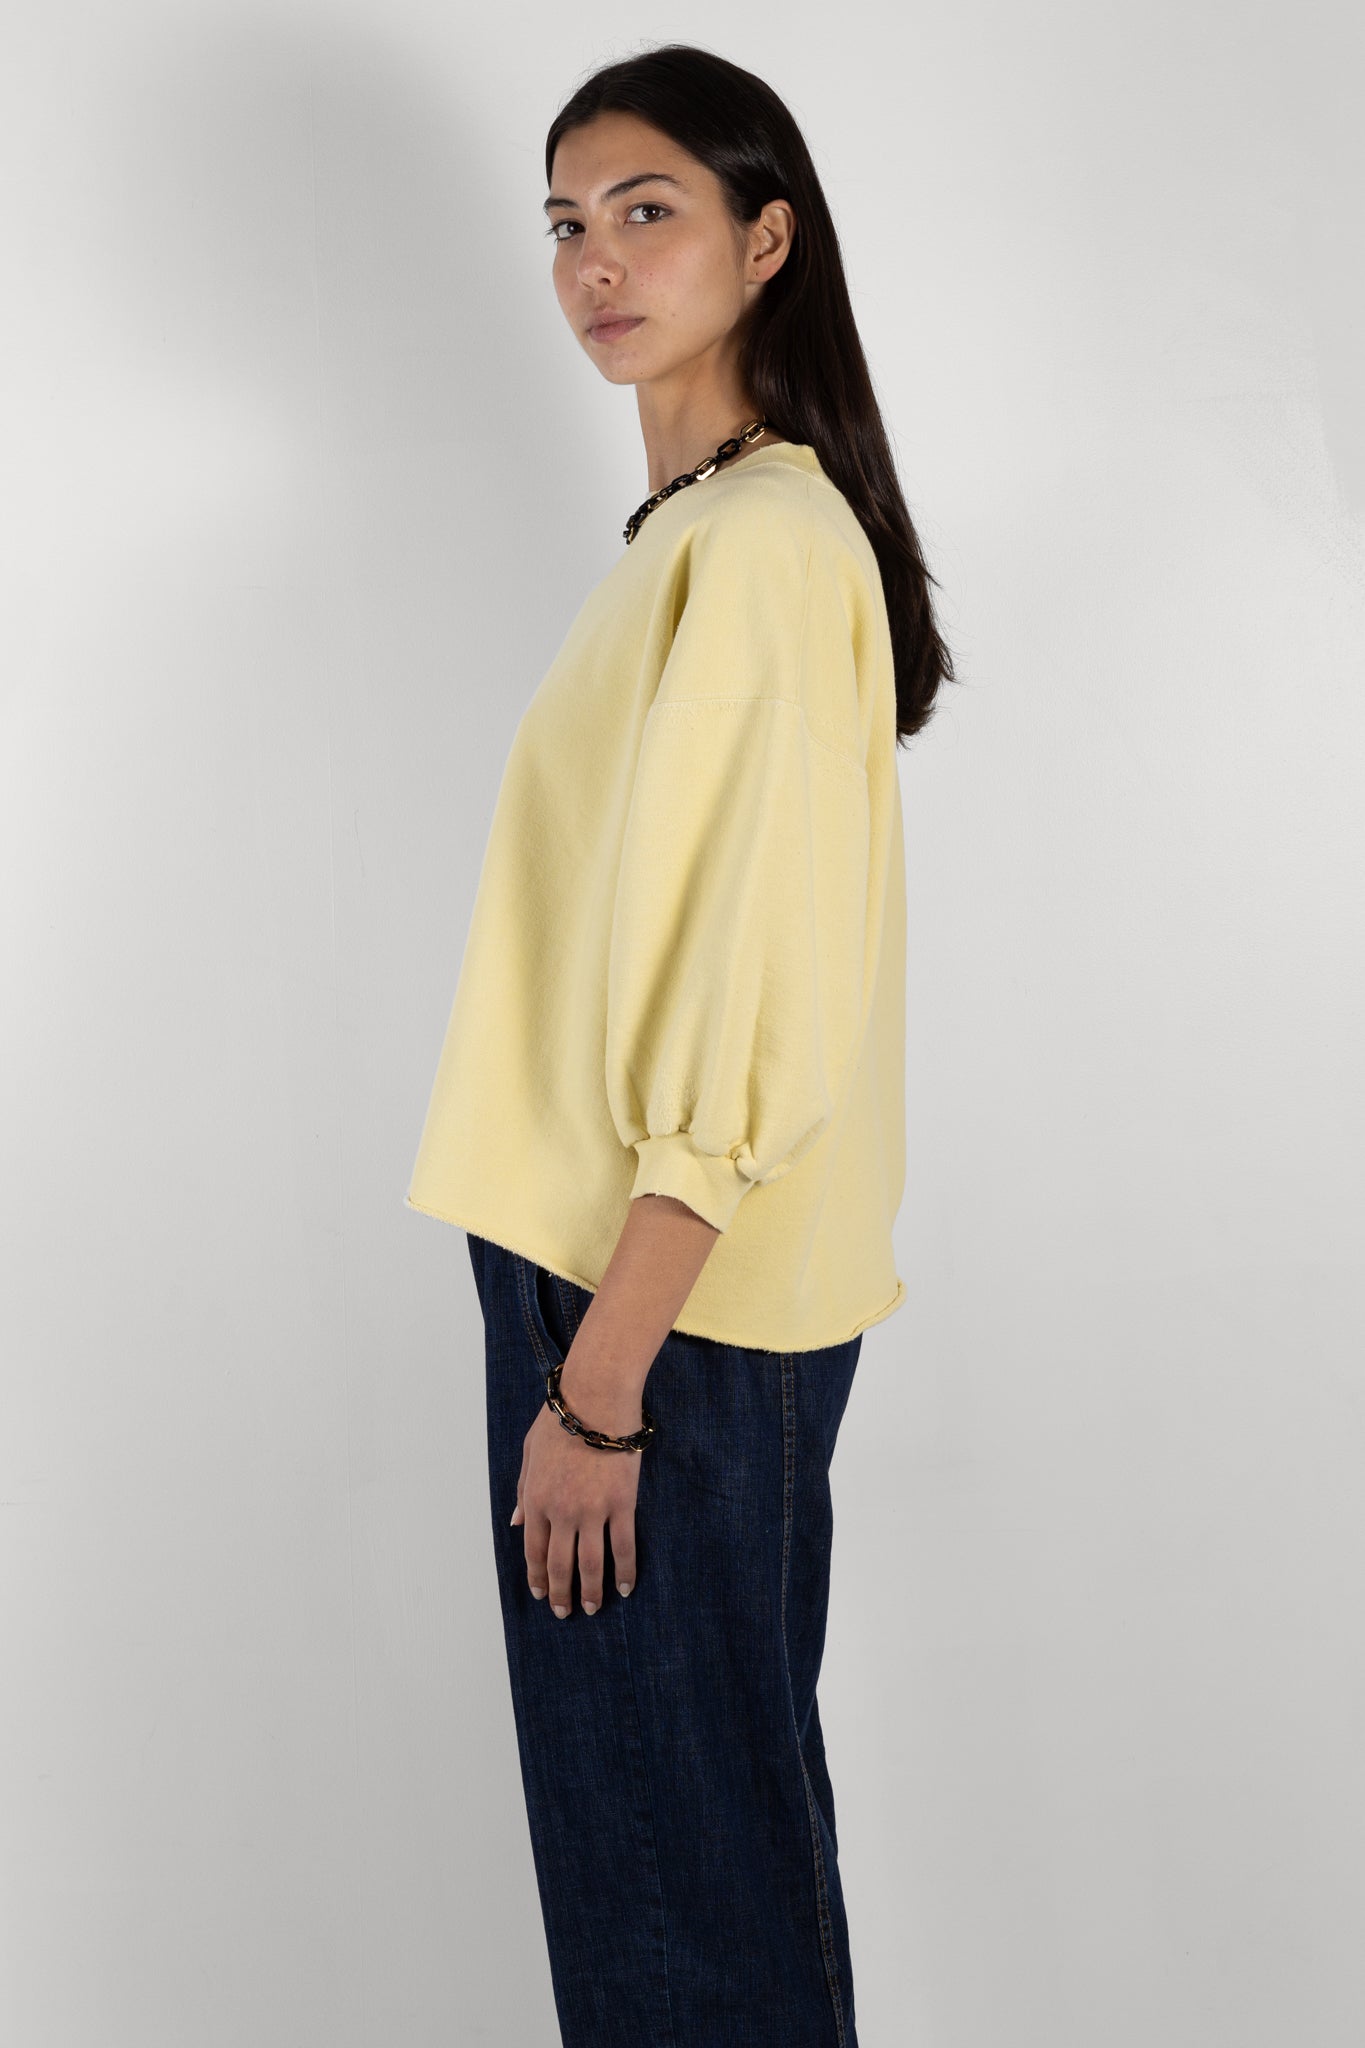 Womens sweatshirt | Rachel Comey Fond Sweatshirt | The Standard Store